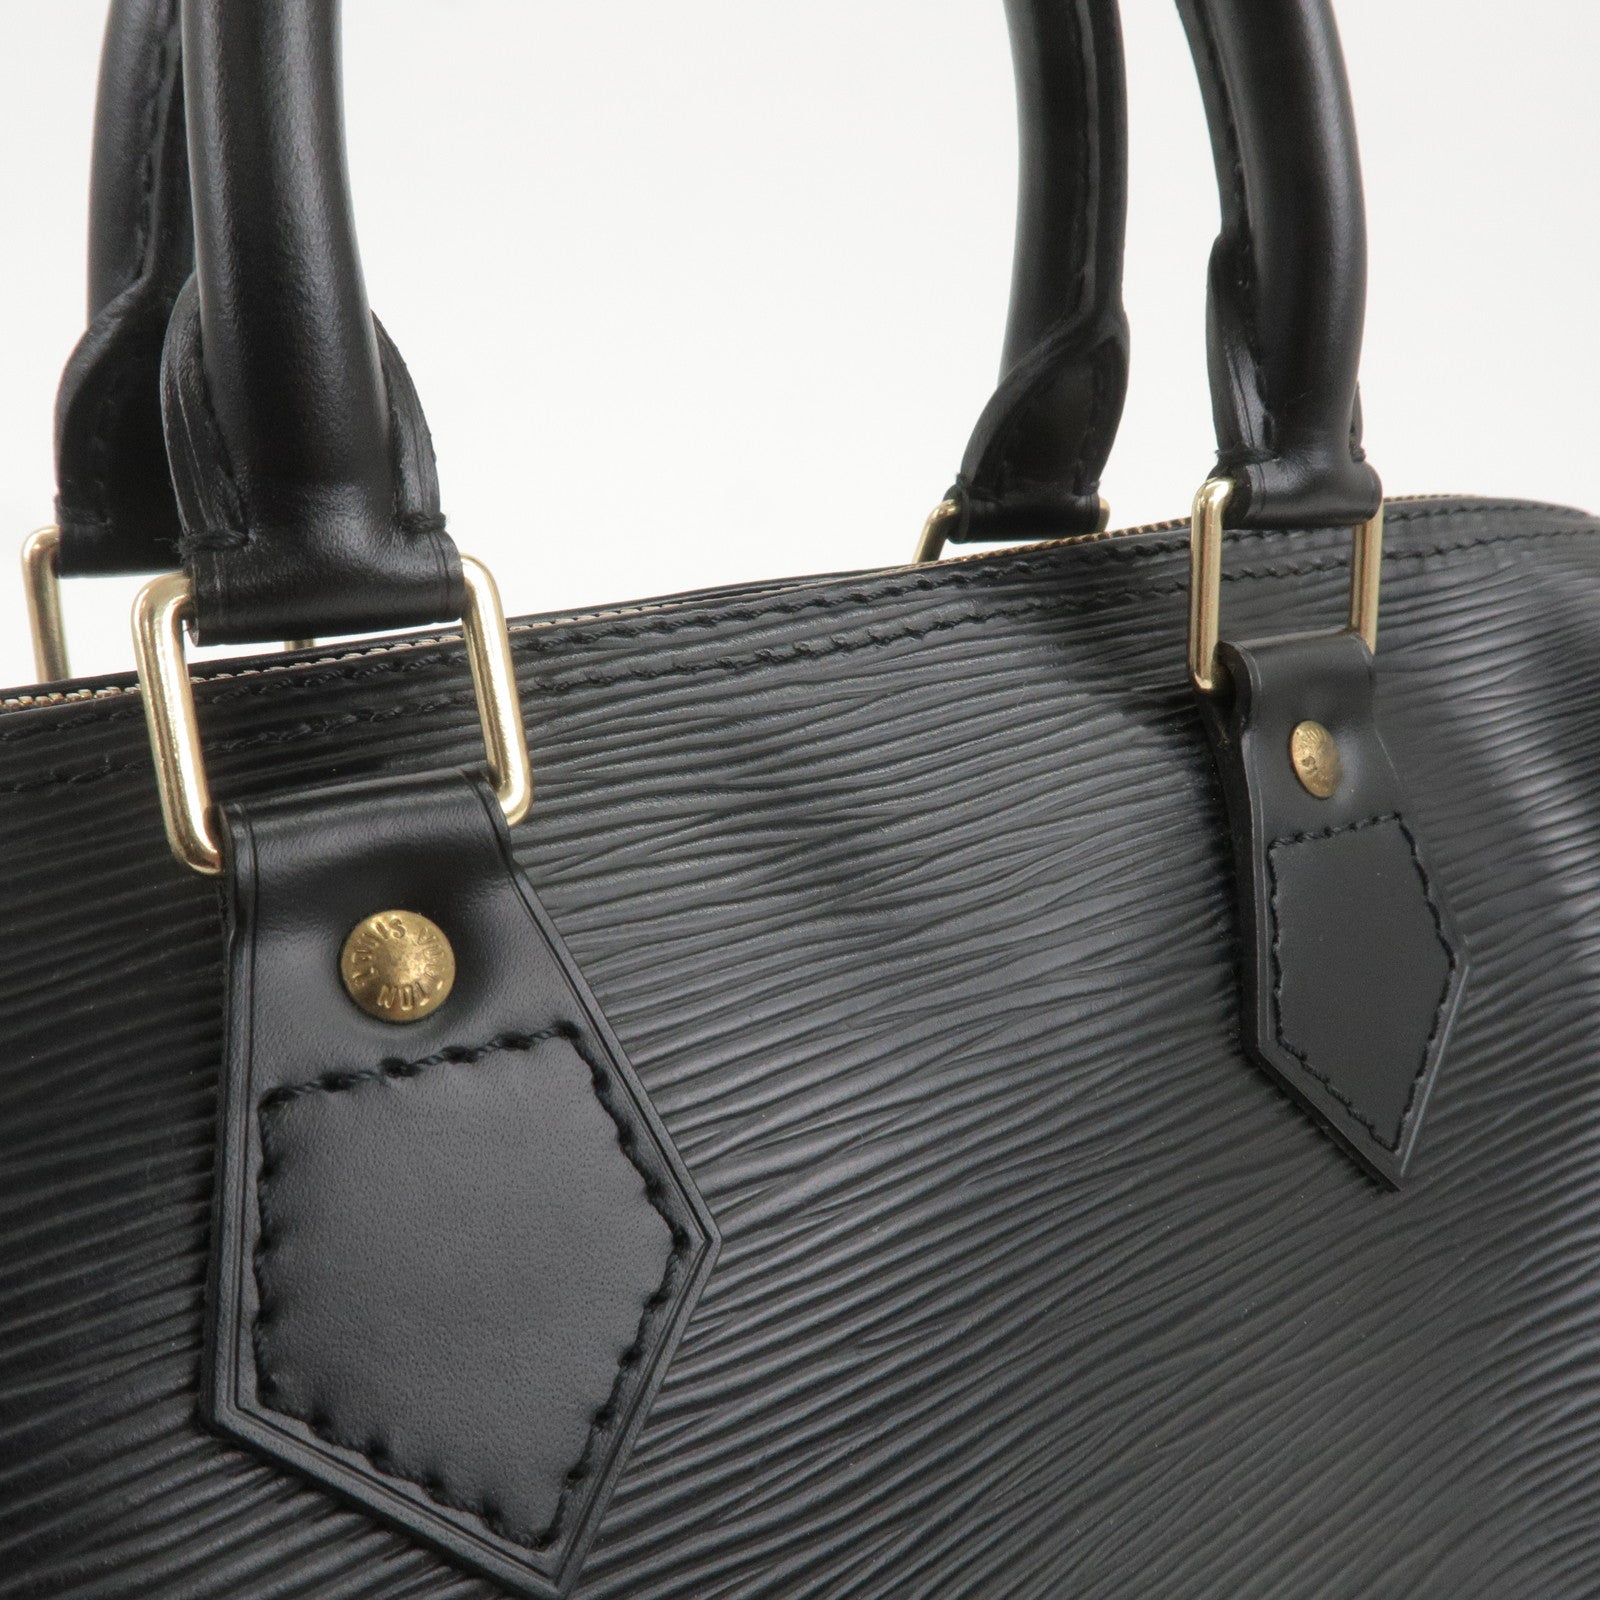 3ac2901] Auth Louis Vuitton Handbag Epi Speedy 25 M59032 Noir